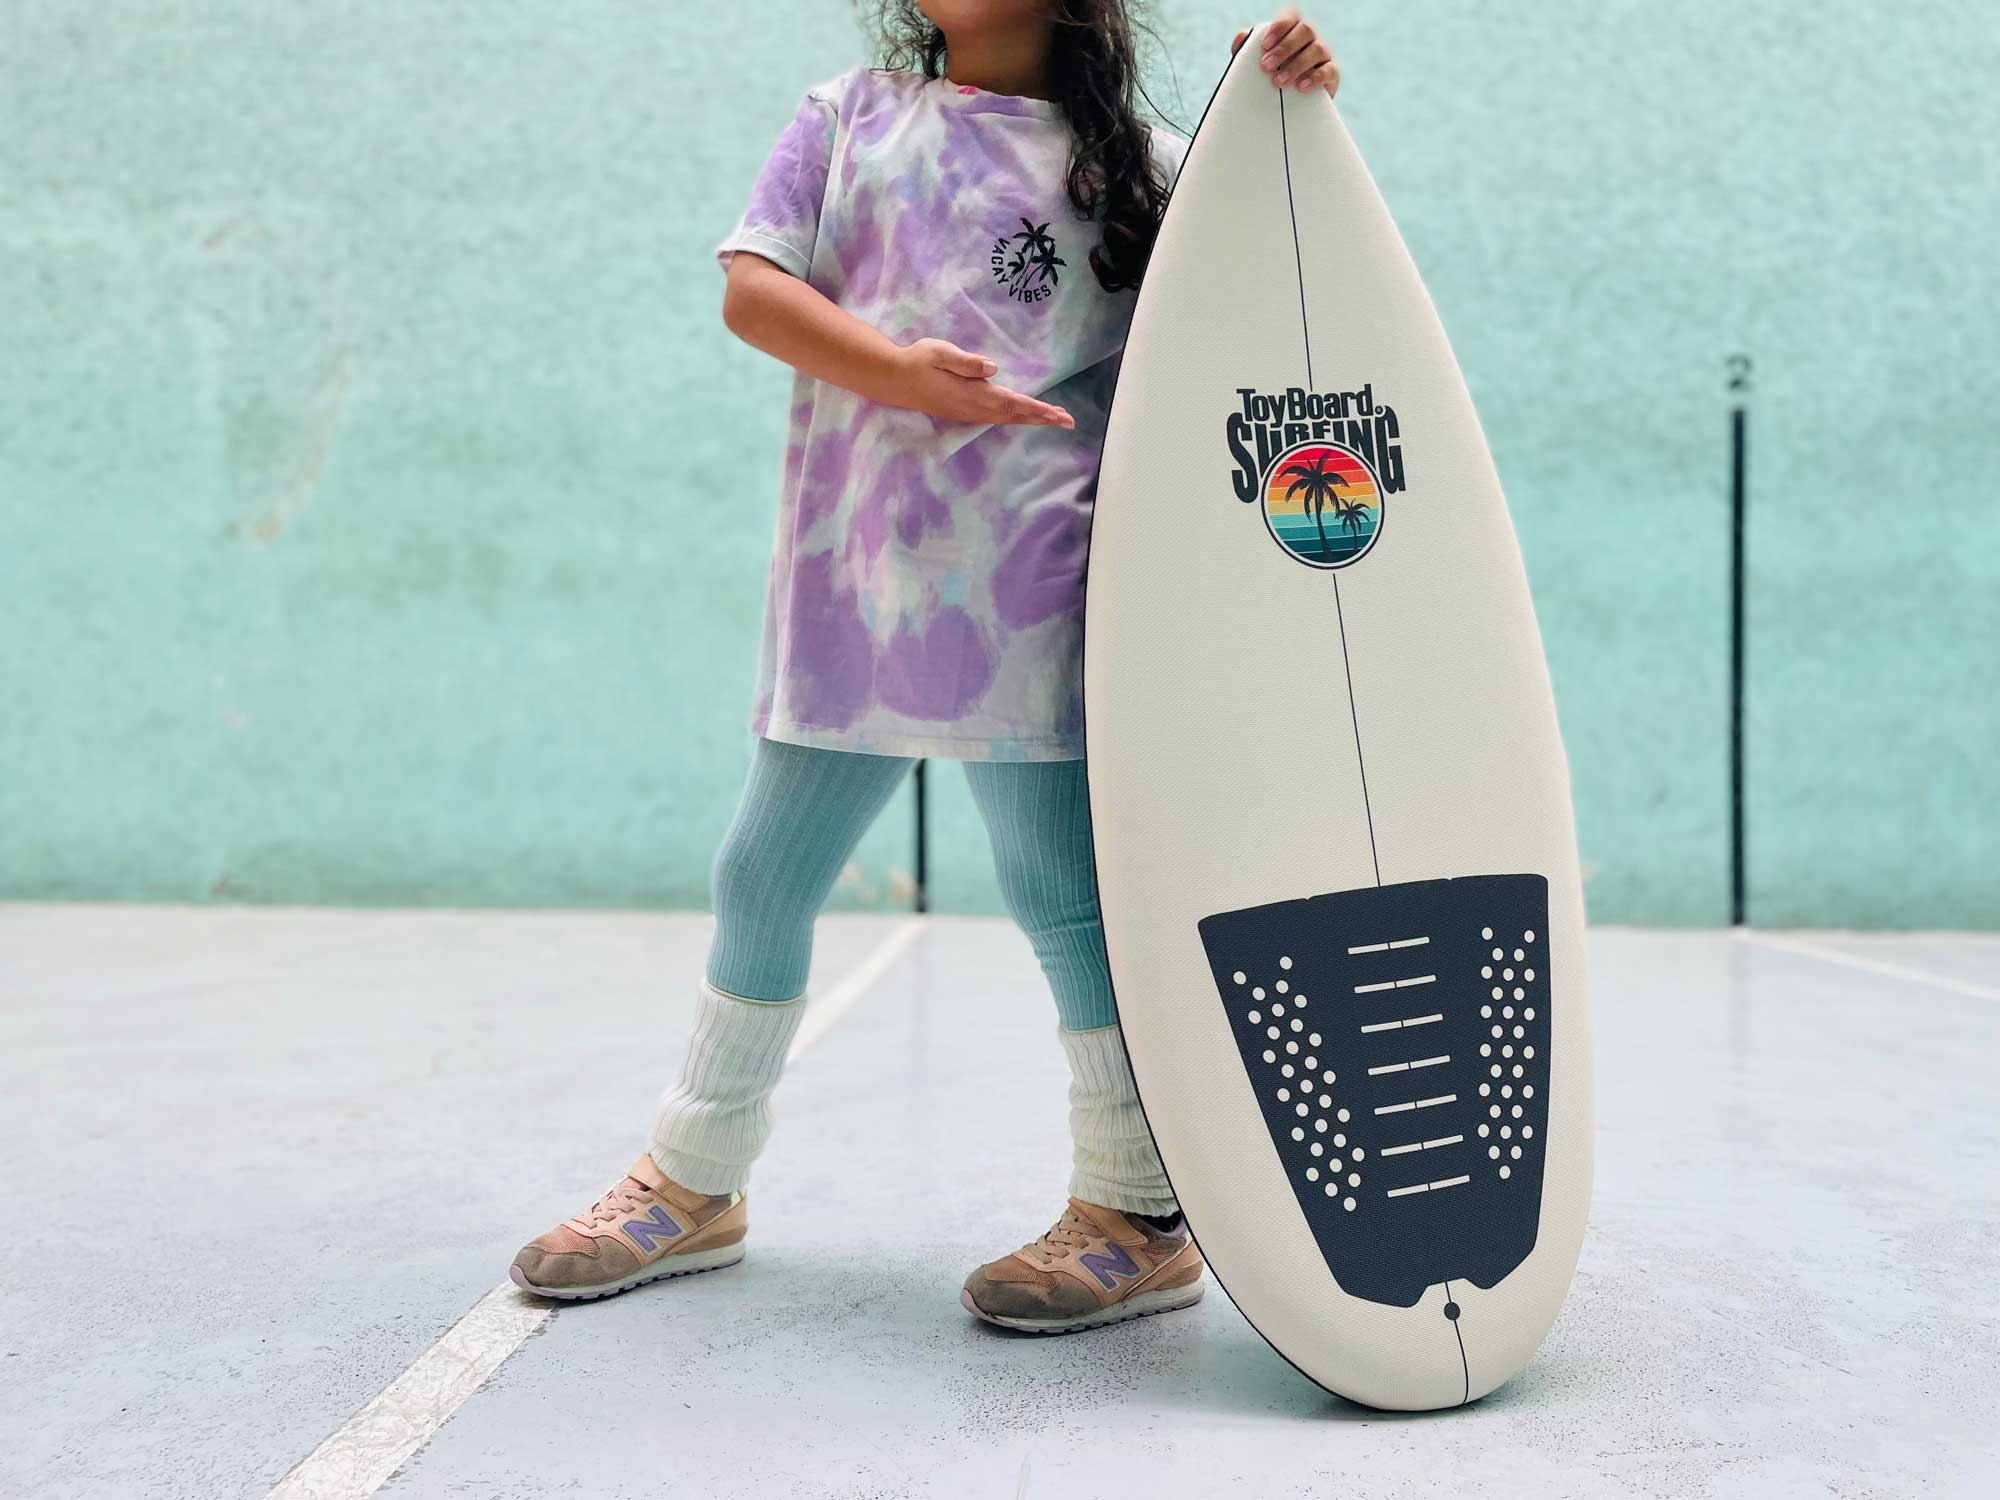 Surfing Balance Board by ToyBoard